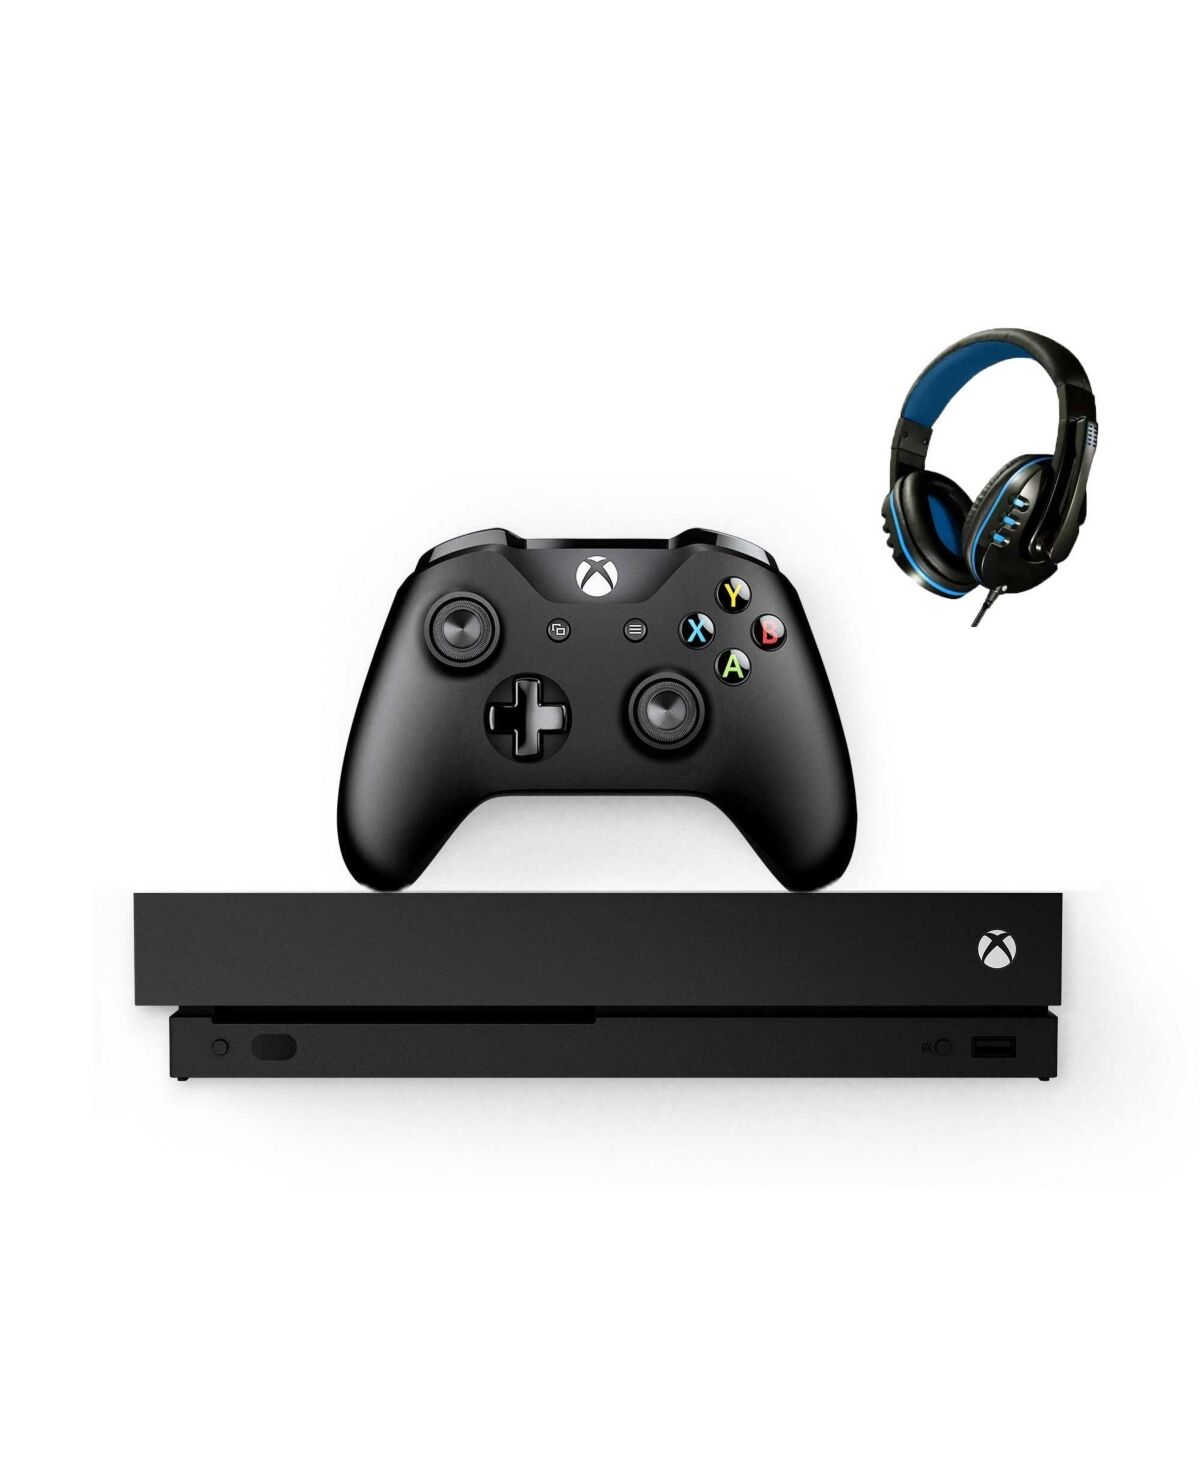 Bolt Axtion Microsoft Xbox One X 1TB Gaming Console Black with Bolt Axtion Bundle Like New - Black